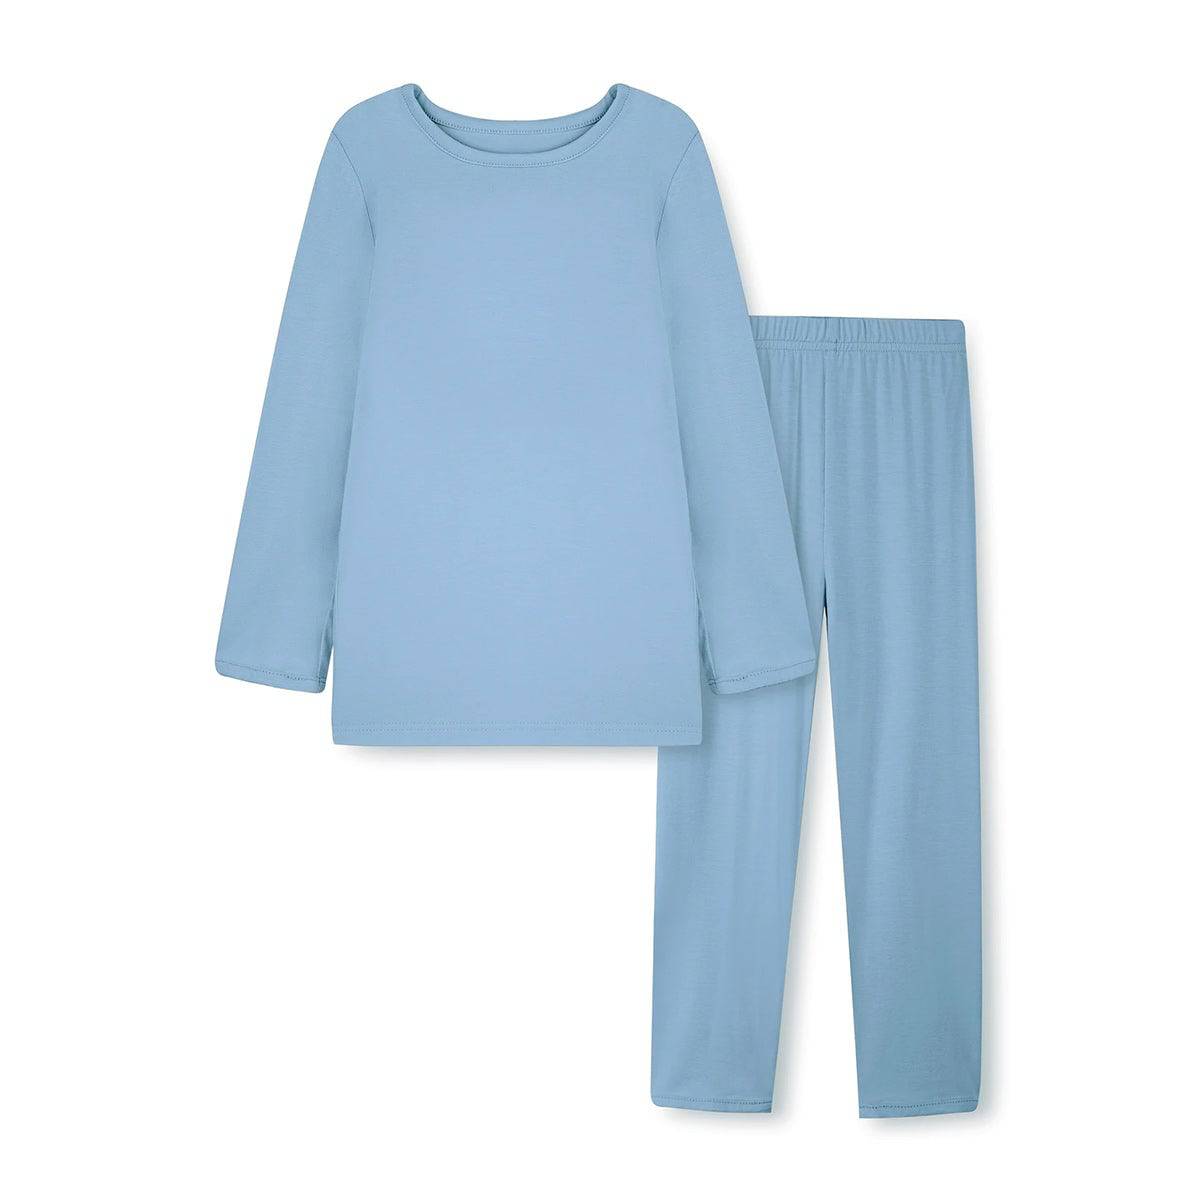 Bamboo Baby Toddler Long Sleeve Pajama Set - Grayish Blue